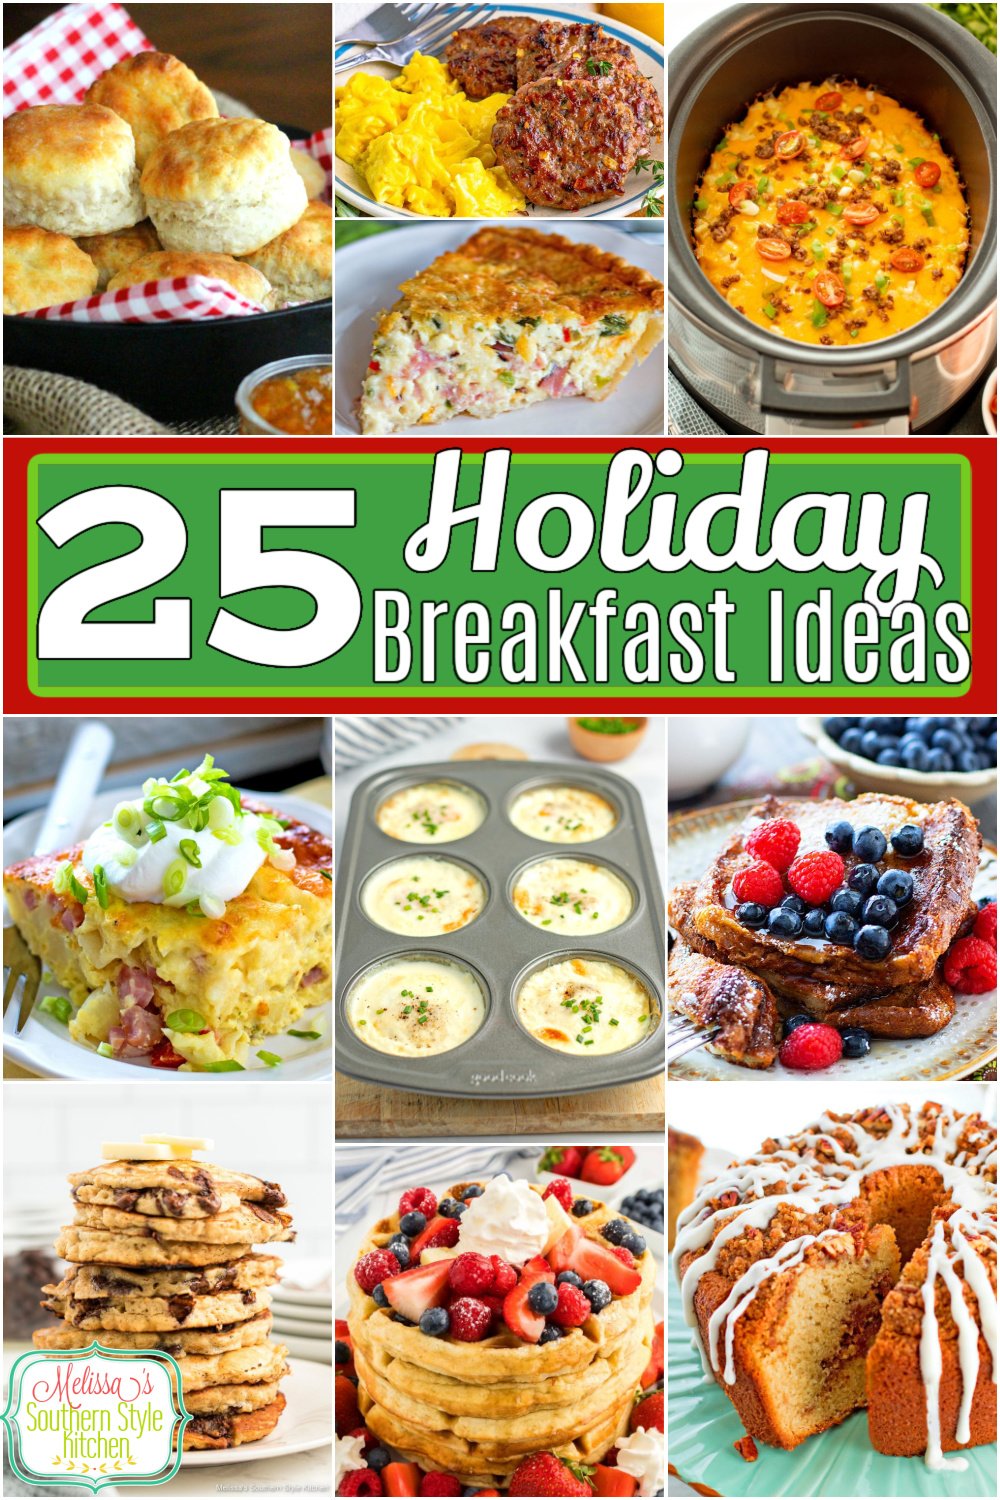 Start your celebration with 25 Holiday Breakfast Ideas certain to impress! #christmasbrunch #easterrecipes #holidaybreakfast #brunchrecipes #christmas #thanksgiving #brunchrecipes via @melissasssk